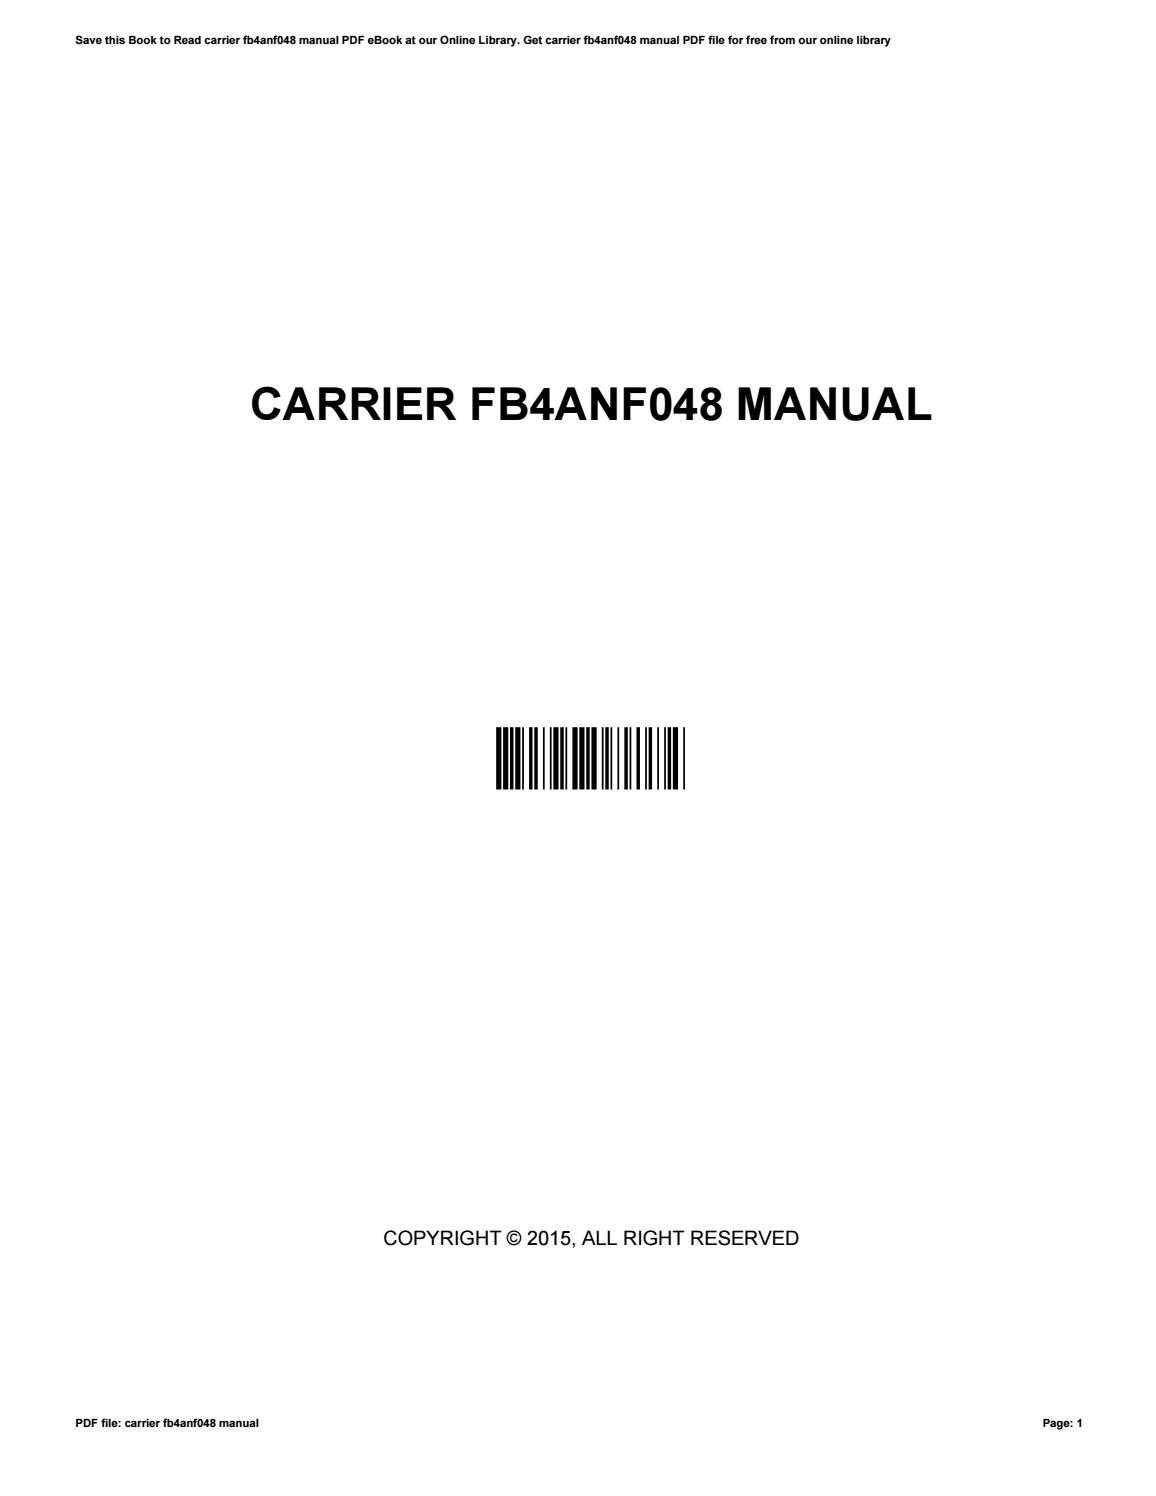 Carrier fb4cn manual